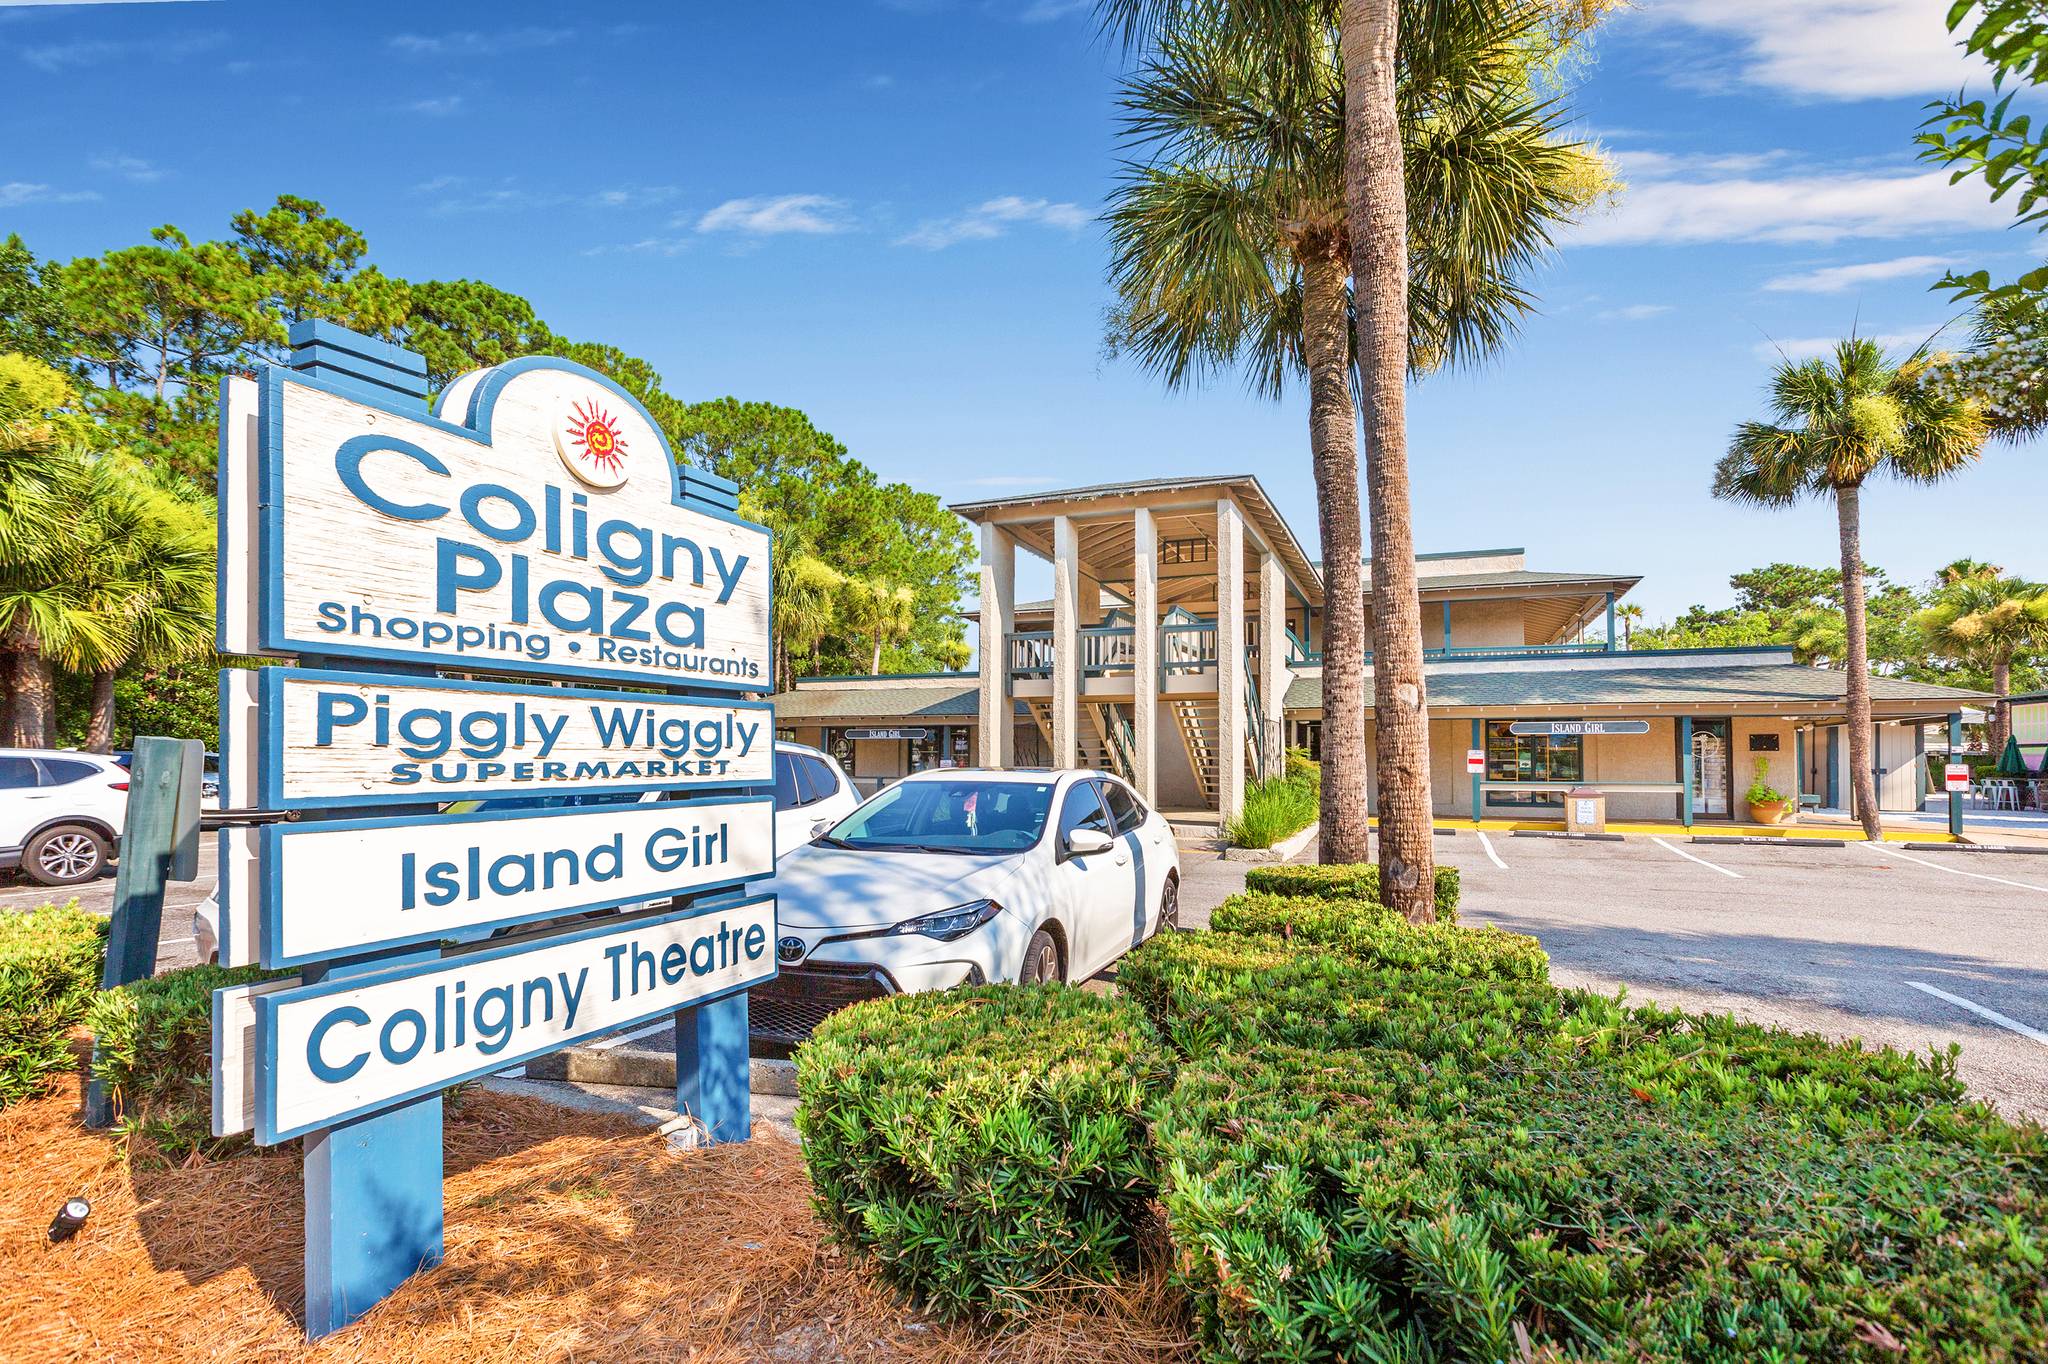 Stores - Coligny Plaza Shopping Center on Hilton Head Island